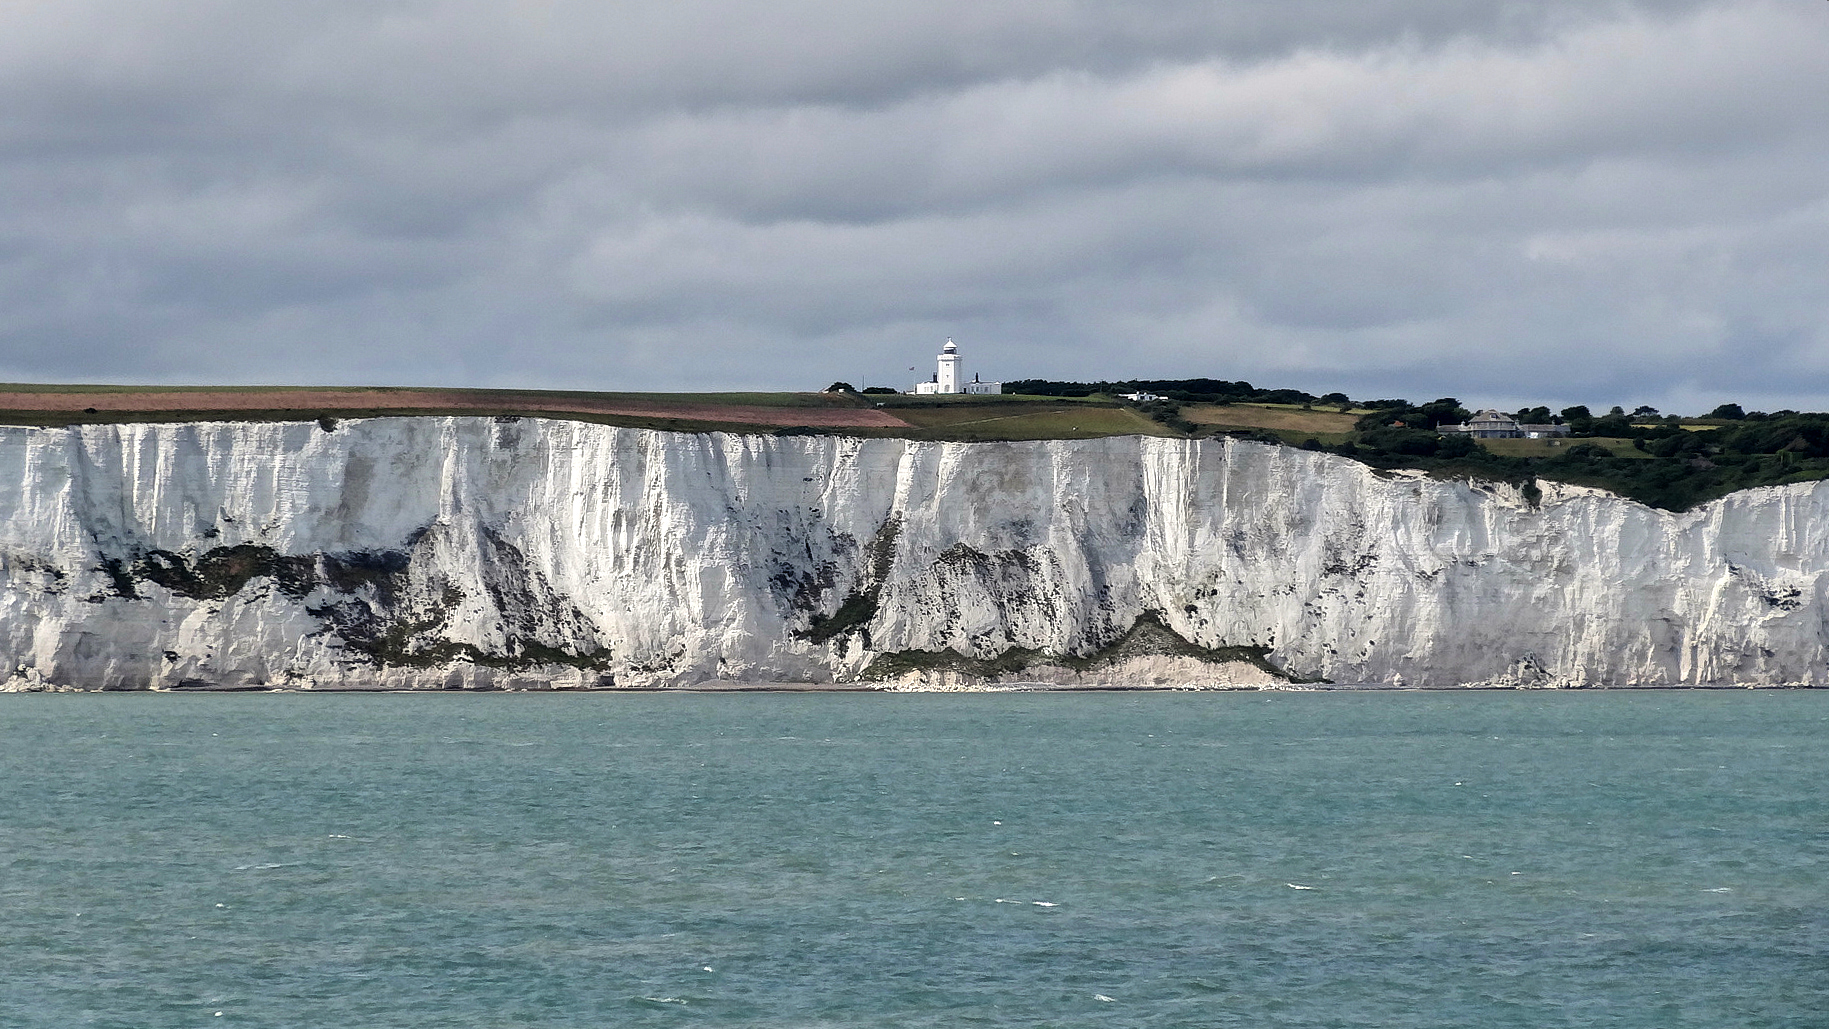 White cliffs of  Dover